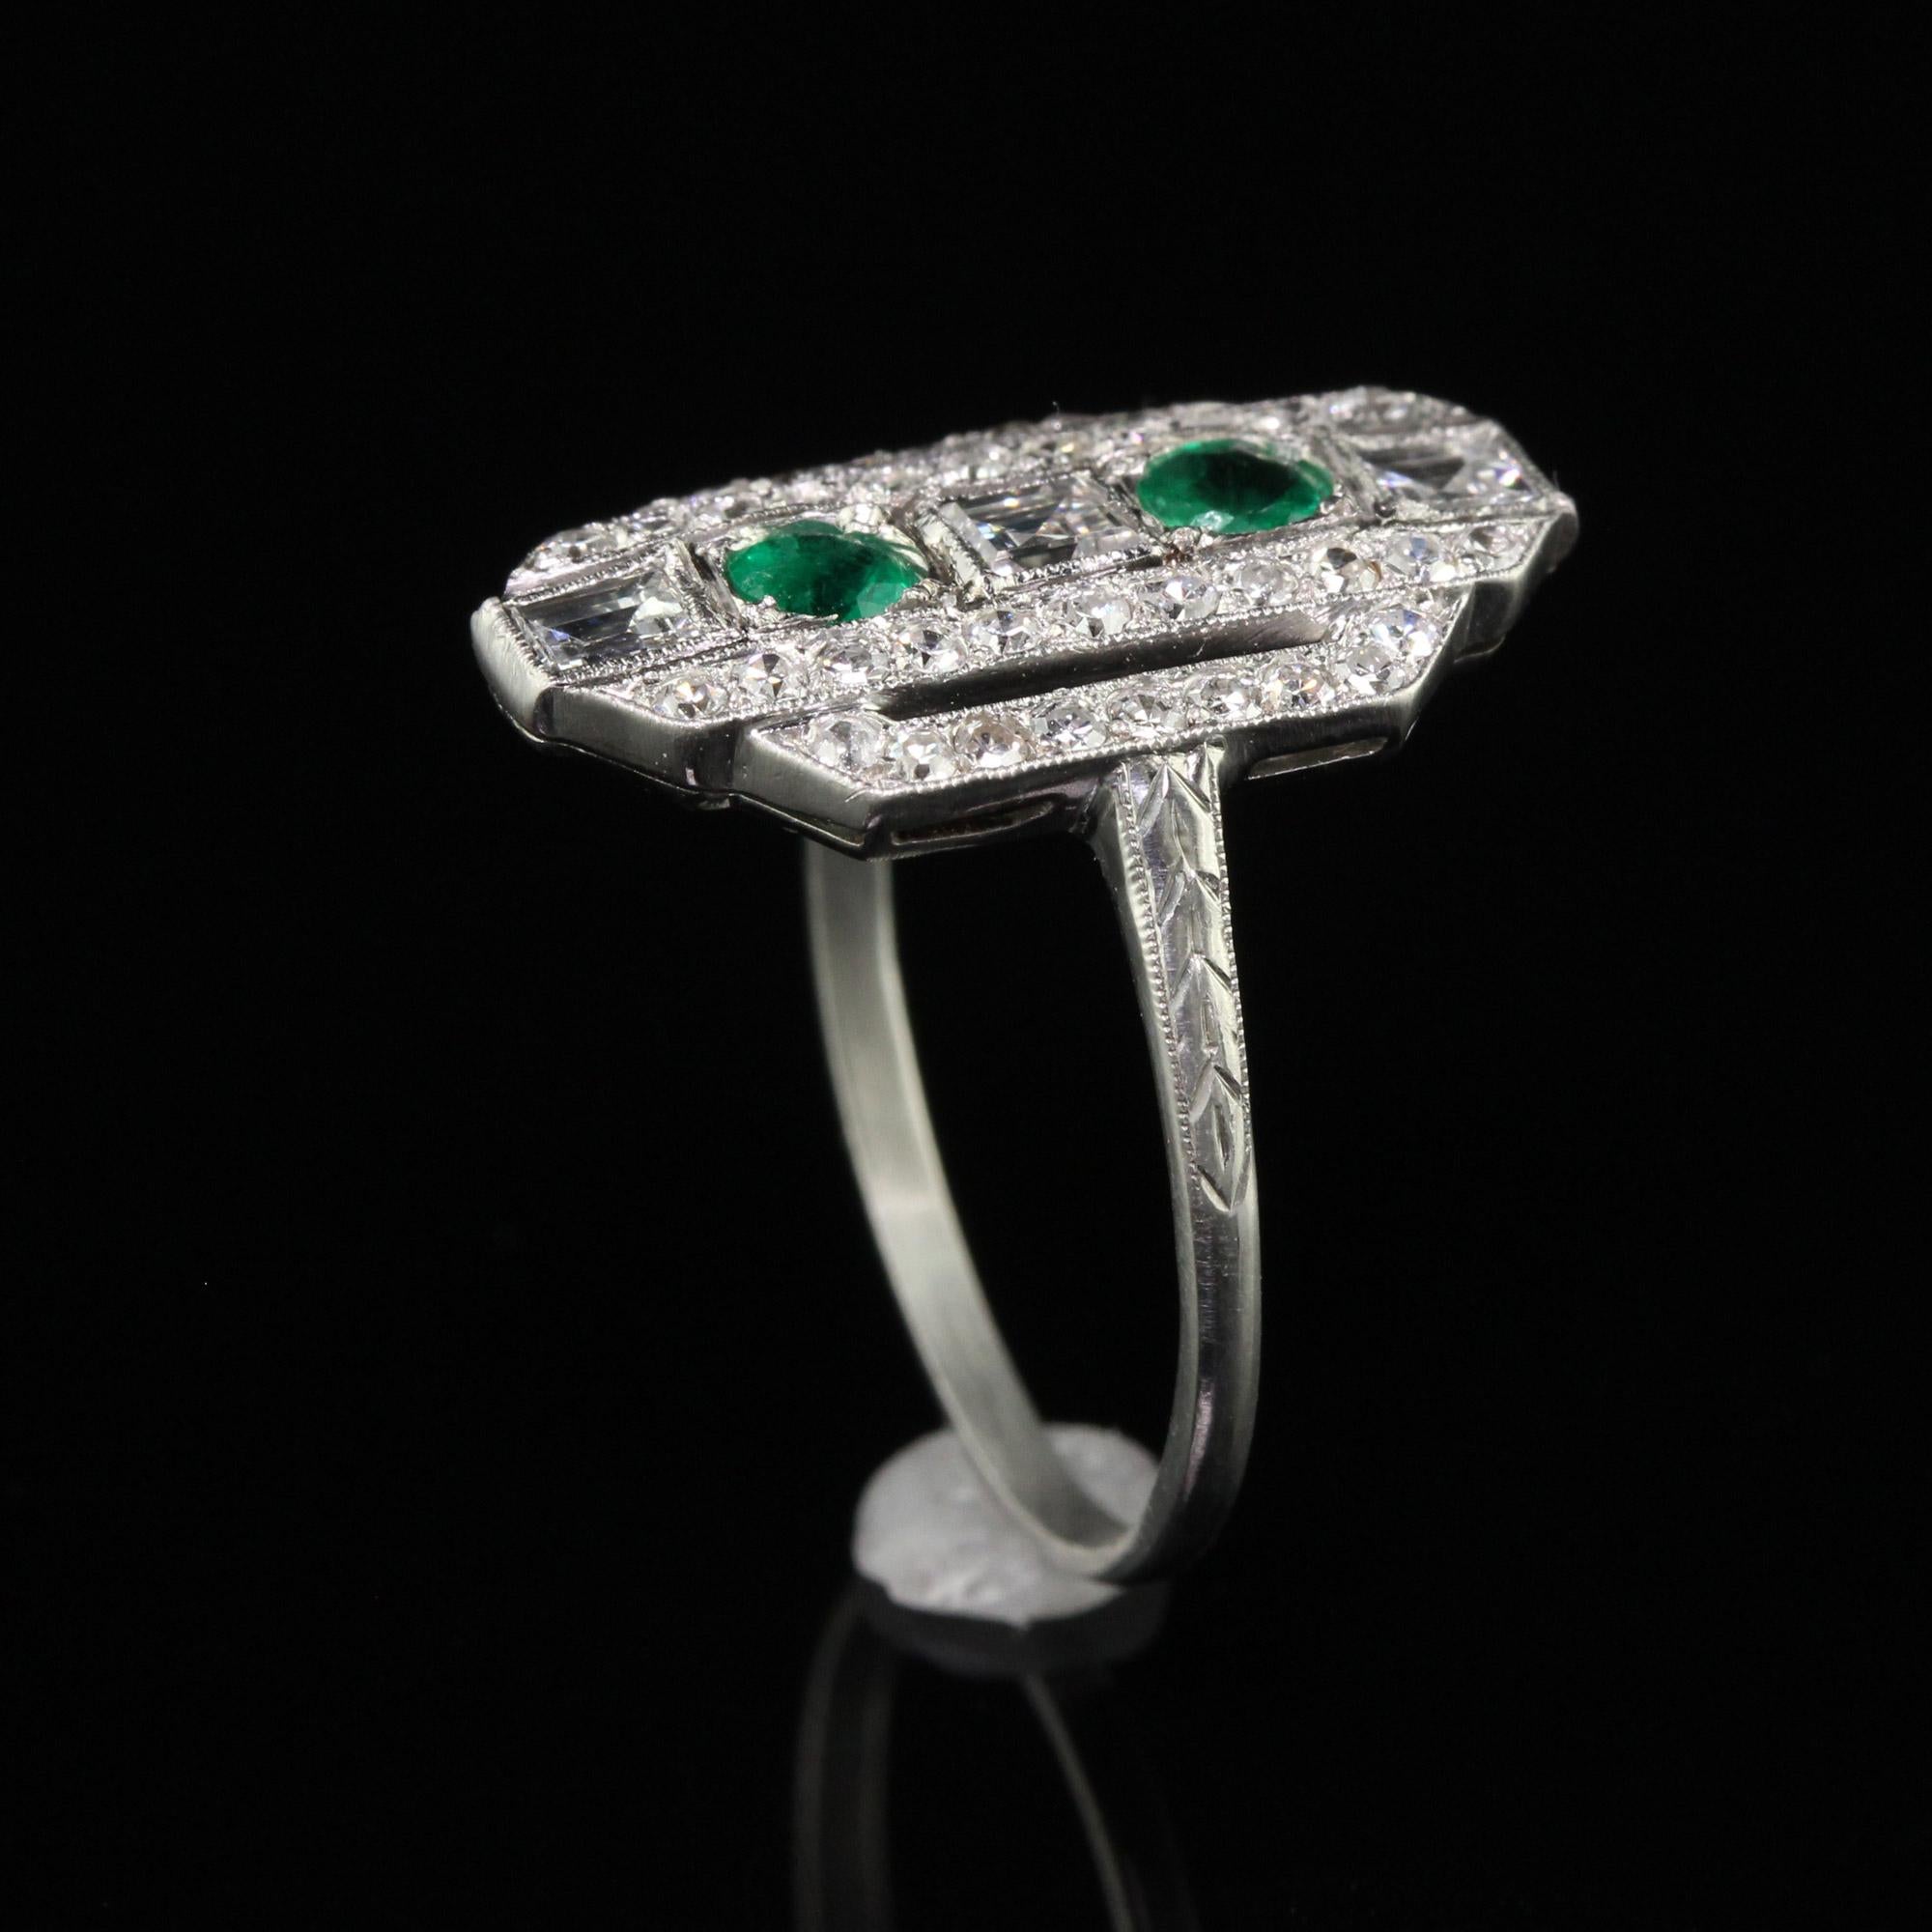 Antique Art Deco Platinum Carre Cut Diamond and Emerald Shield Ring - Size 6 3/4 3